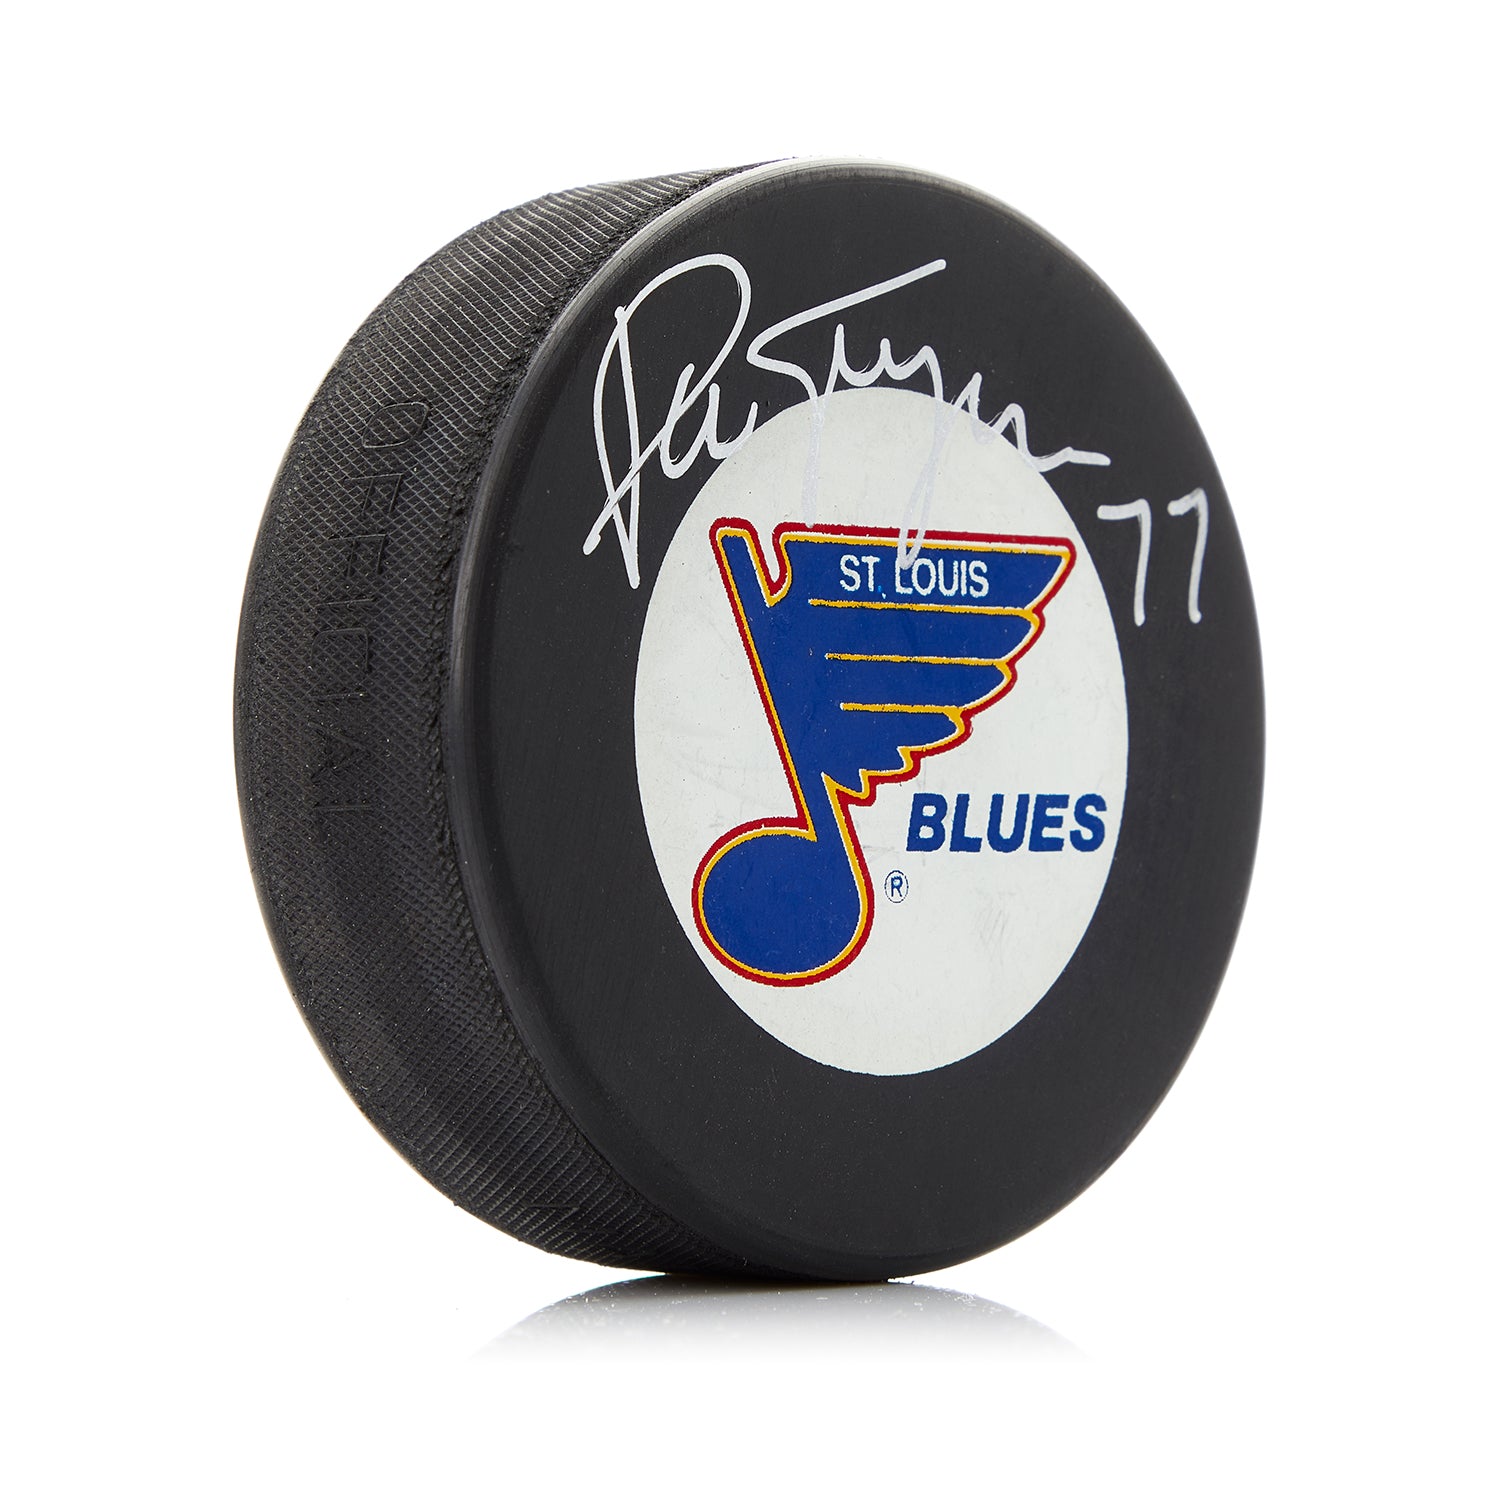 Pierre Turgeon Autographed St Louis Blues Hockey Puck